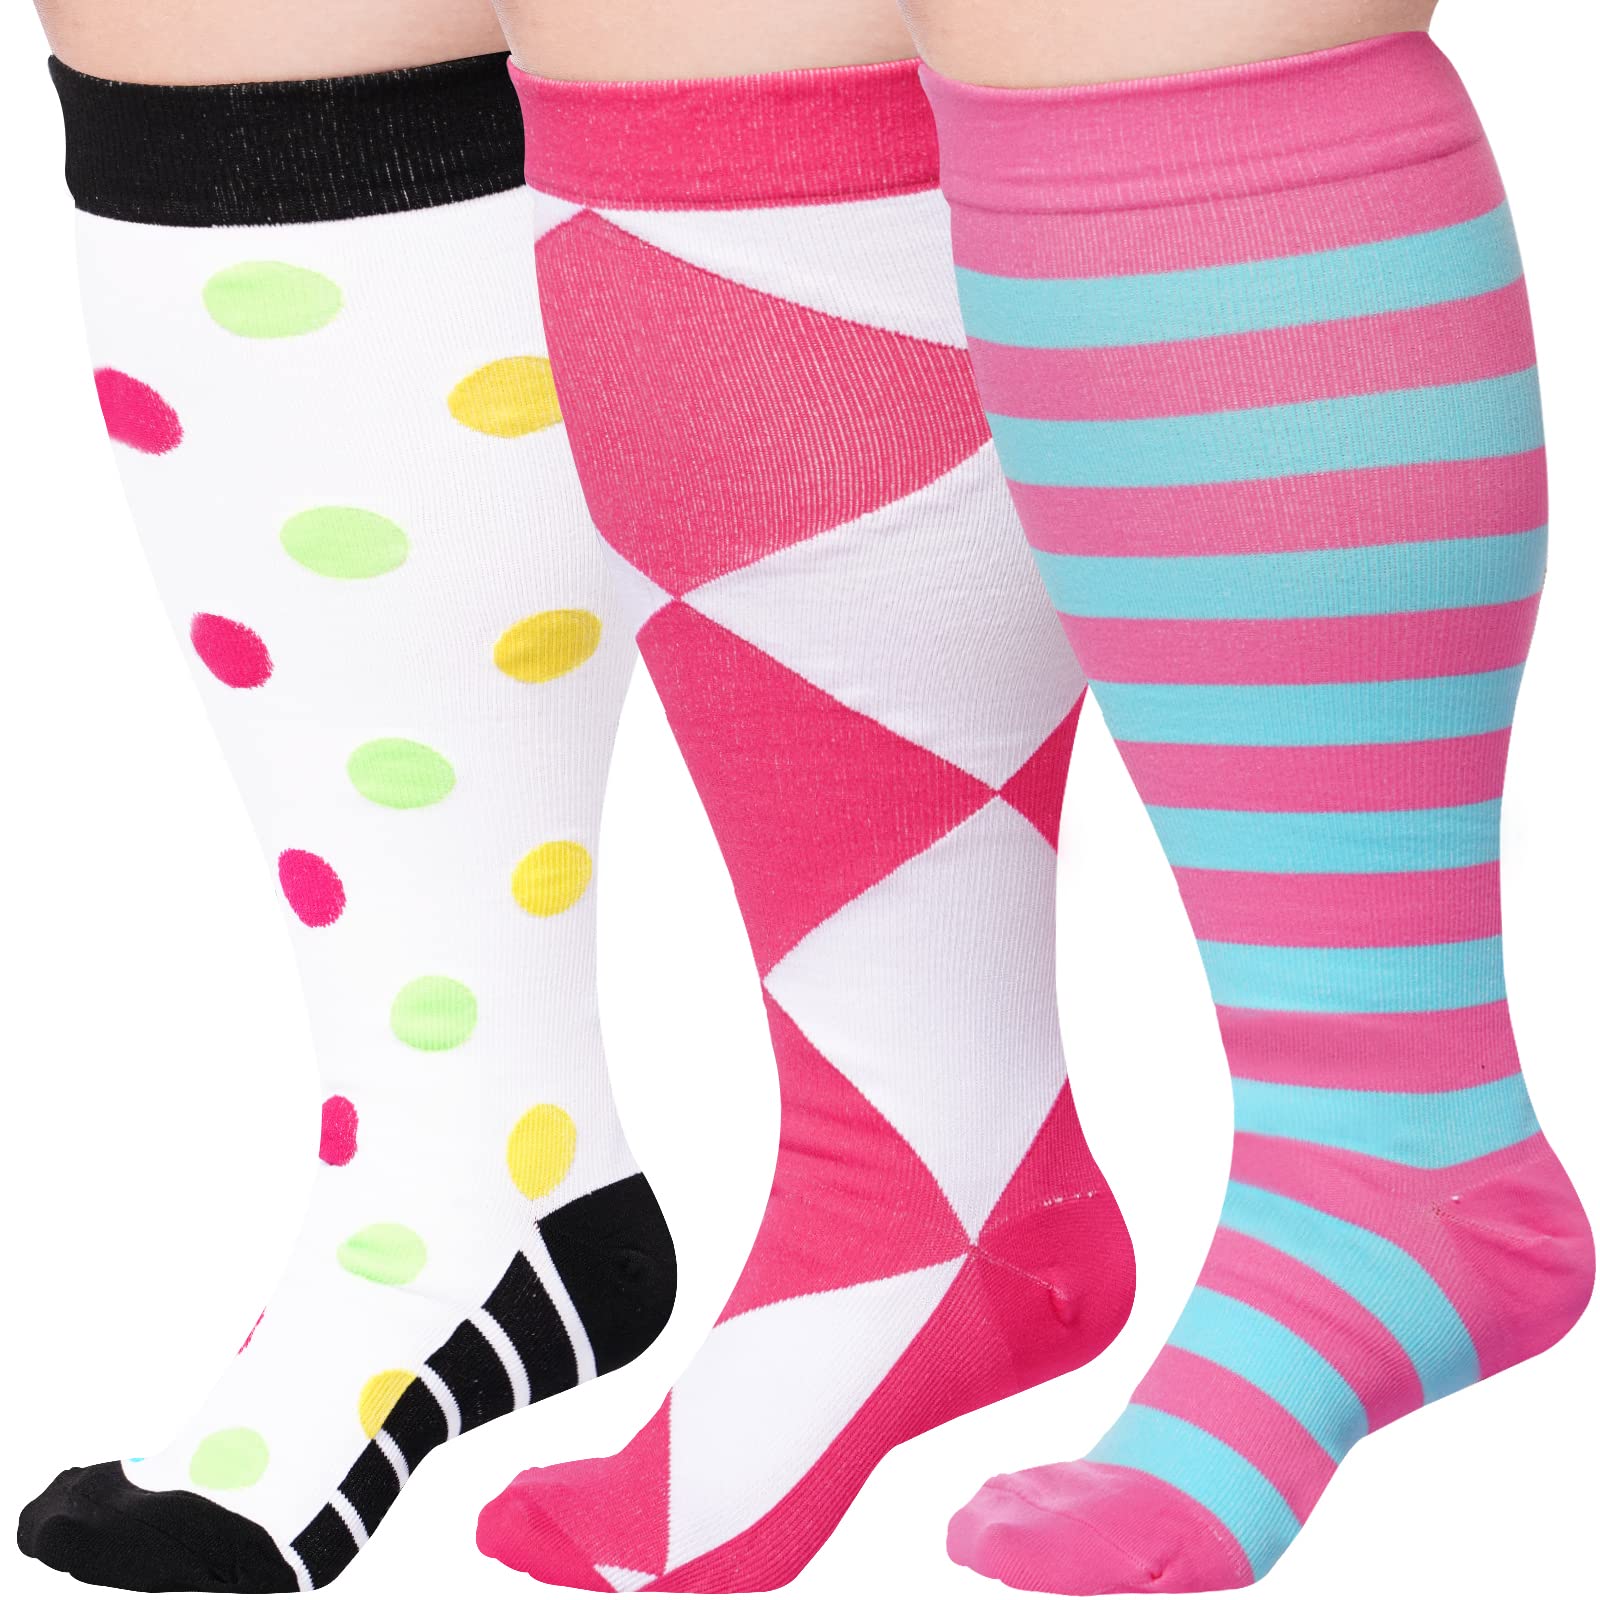 3 Pairs Plus Size Knee High Compression Socks for Women & Men-Polka dot,Rhombus,Stripe - Moon Wood